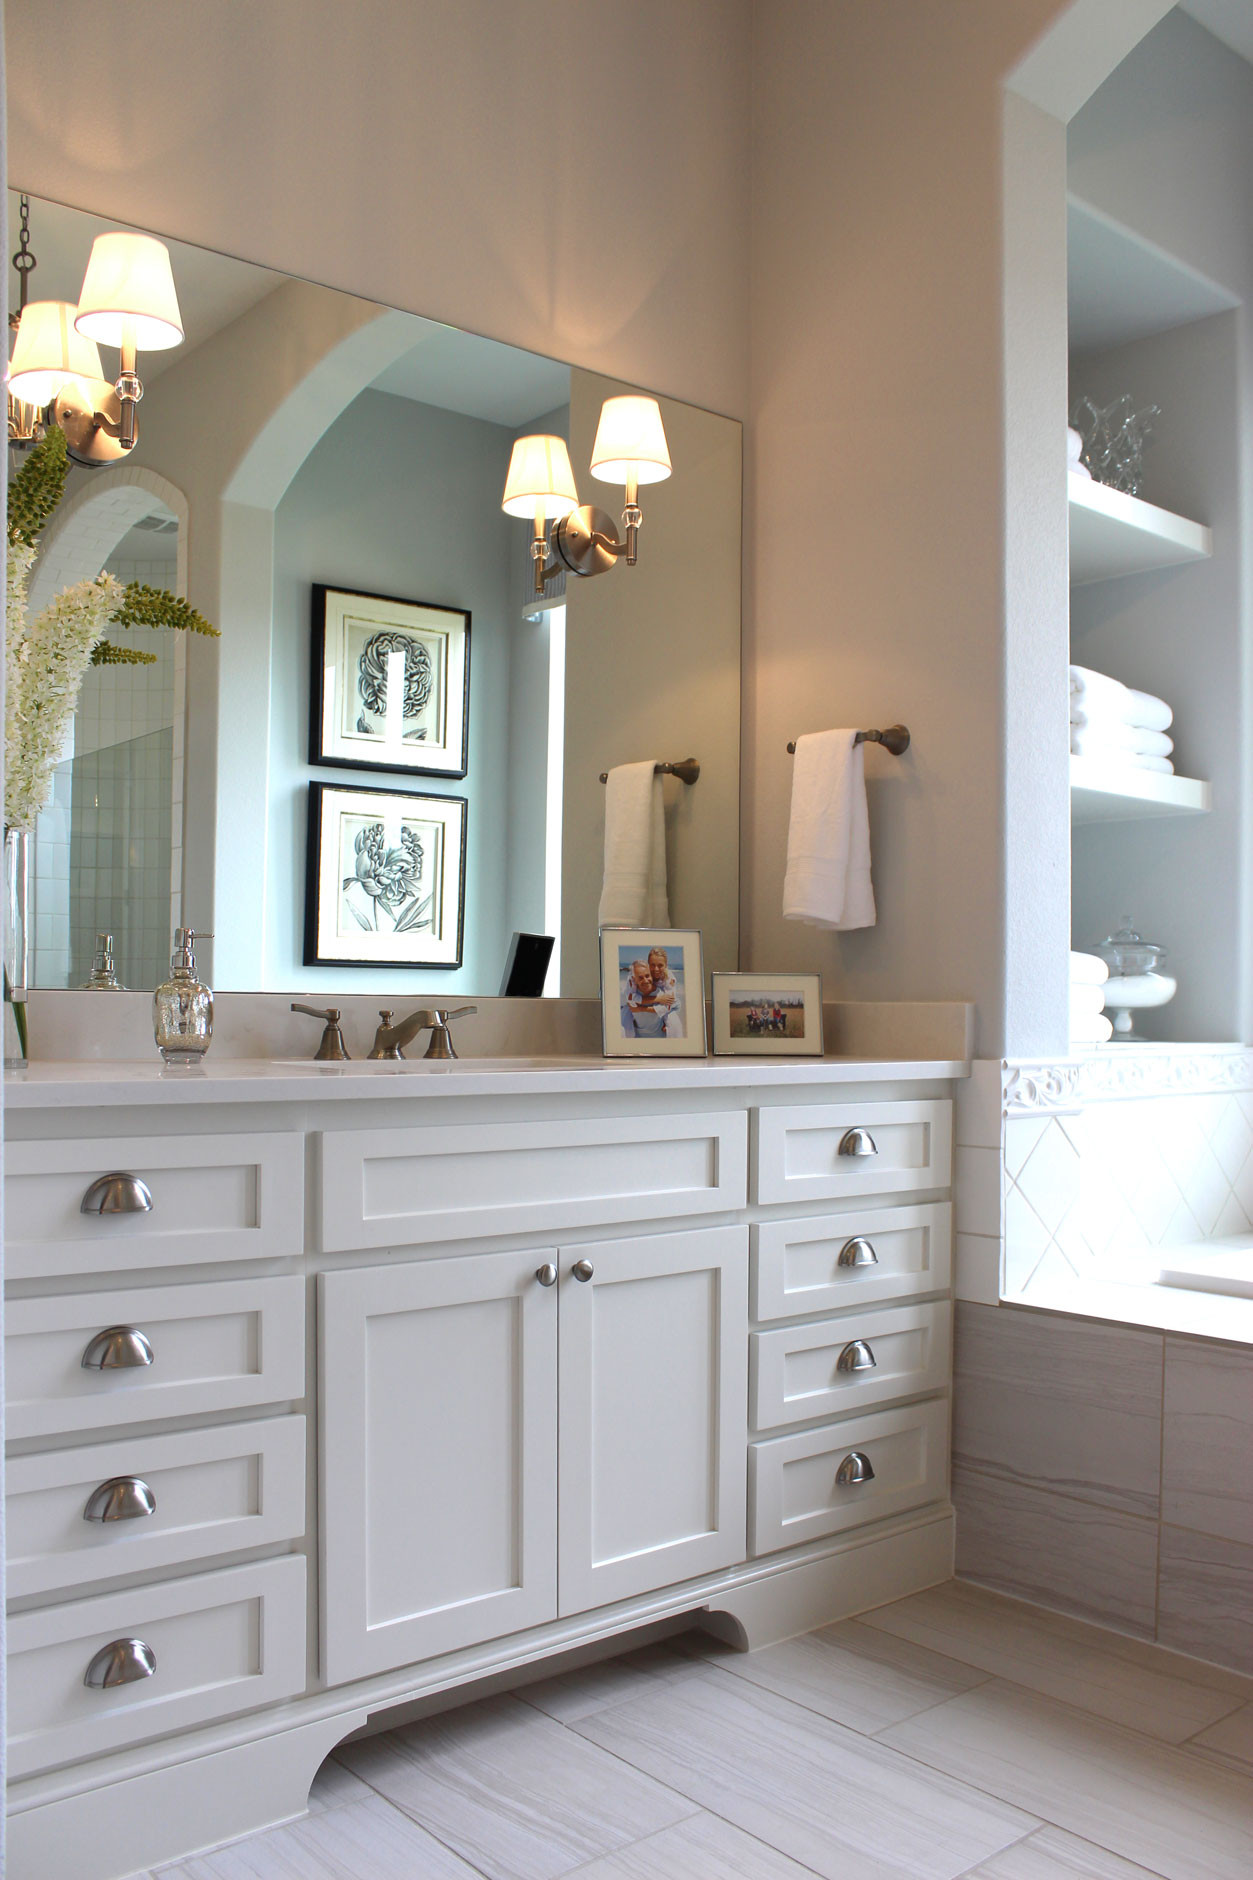 White Shaker Bathroom Cabinets
 White shaker style master bath cabinets